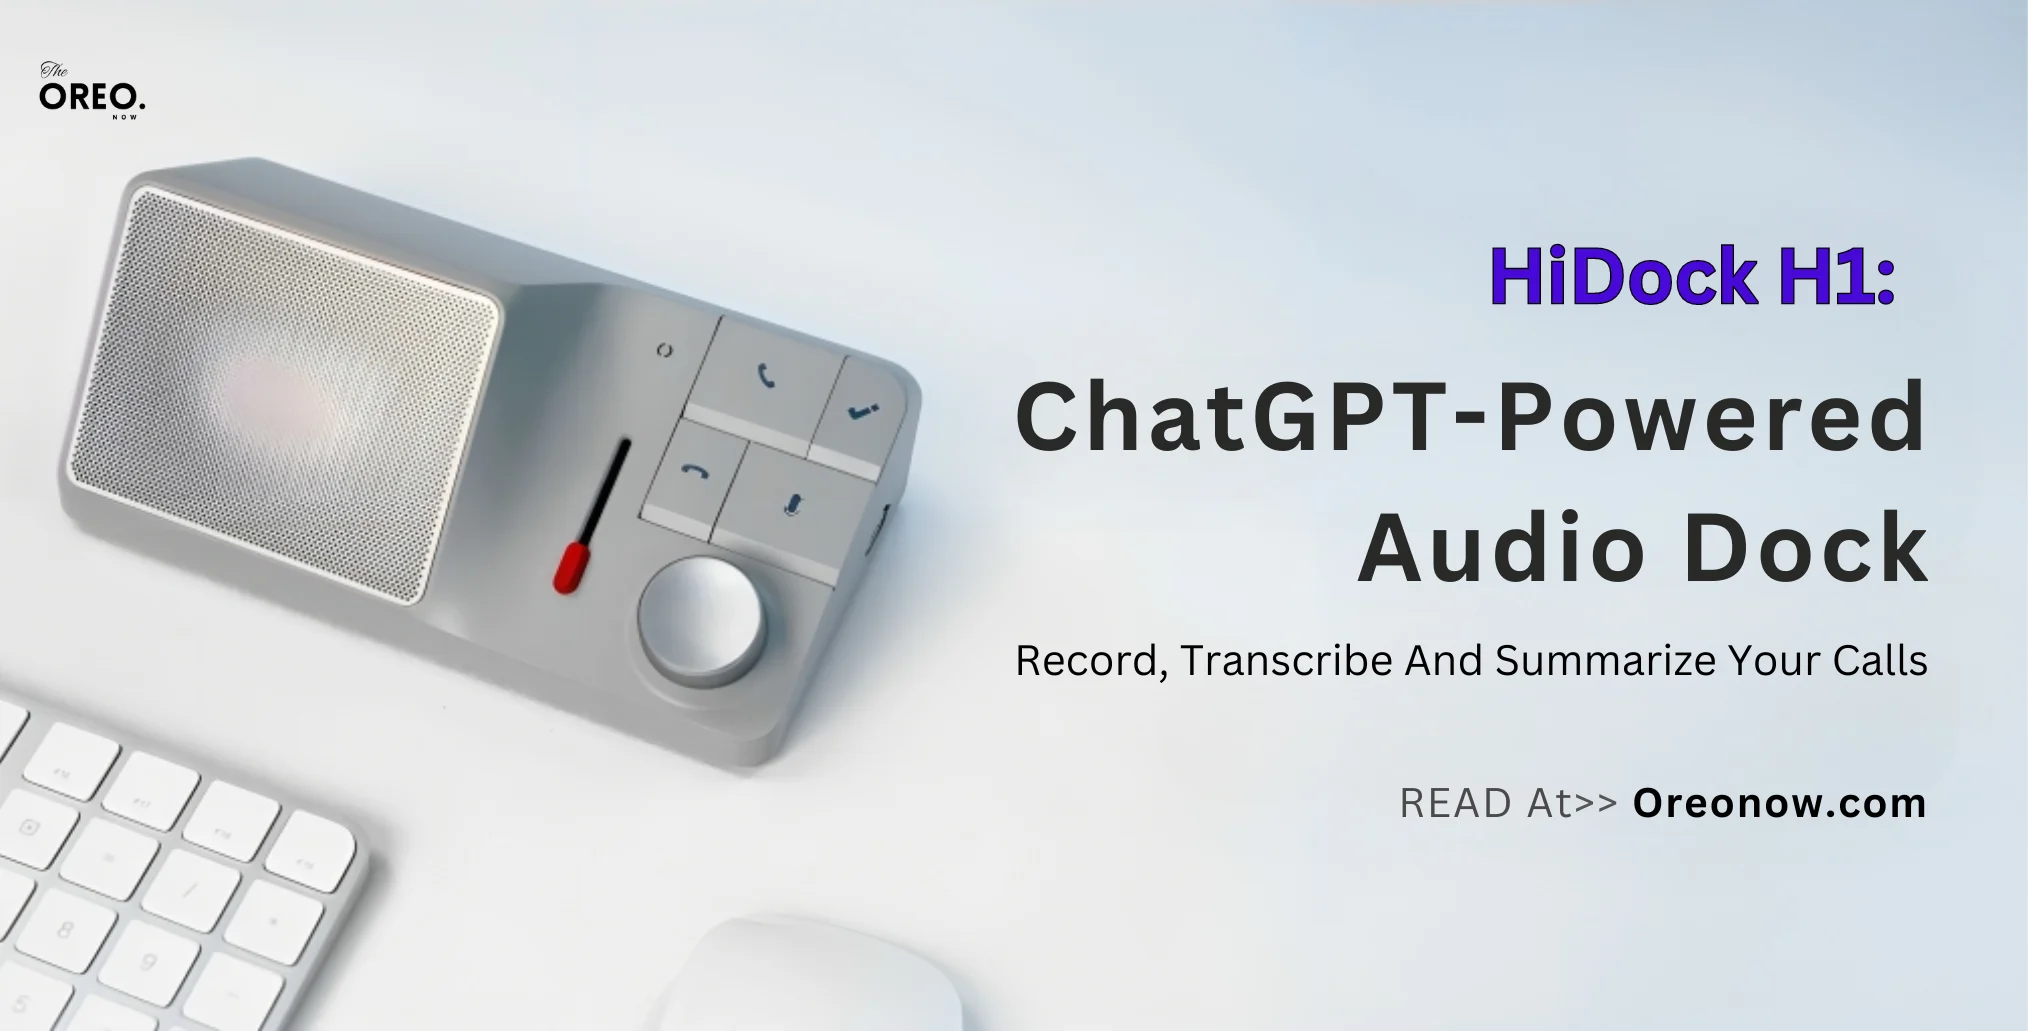 HiDock H1: ChatGPT-Powered Audio Dock